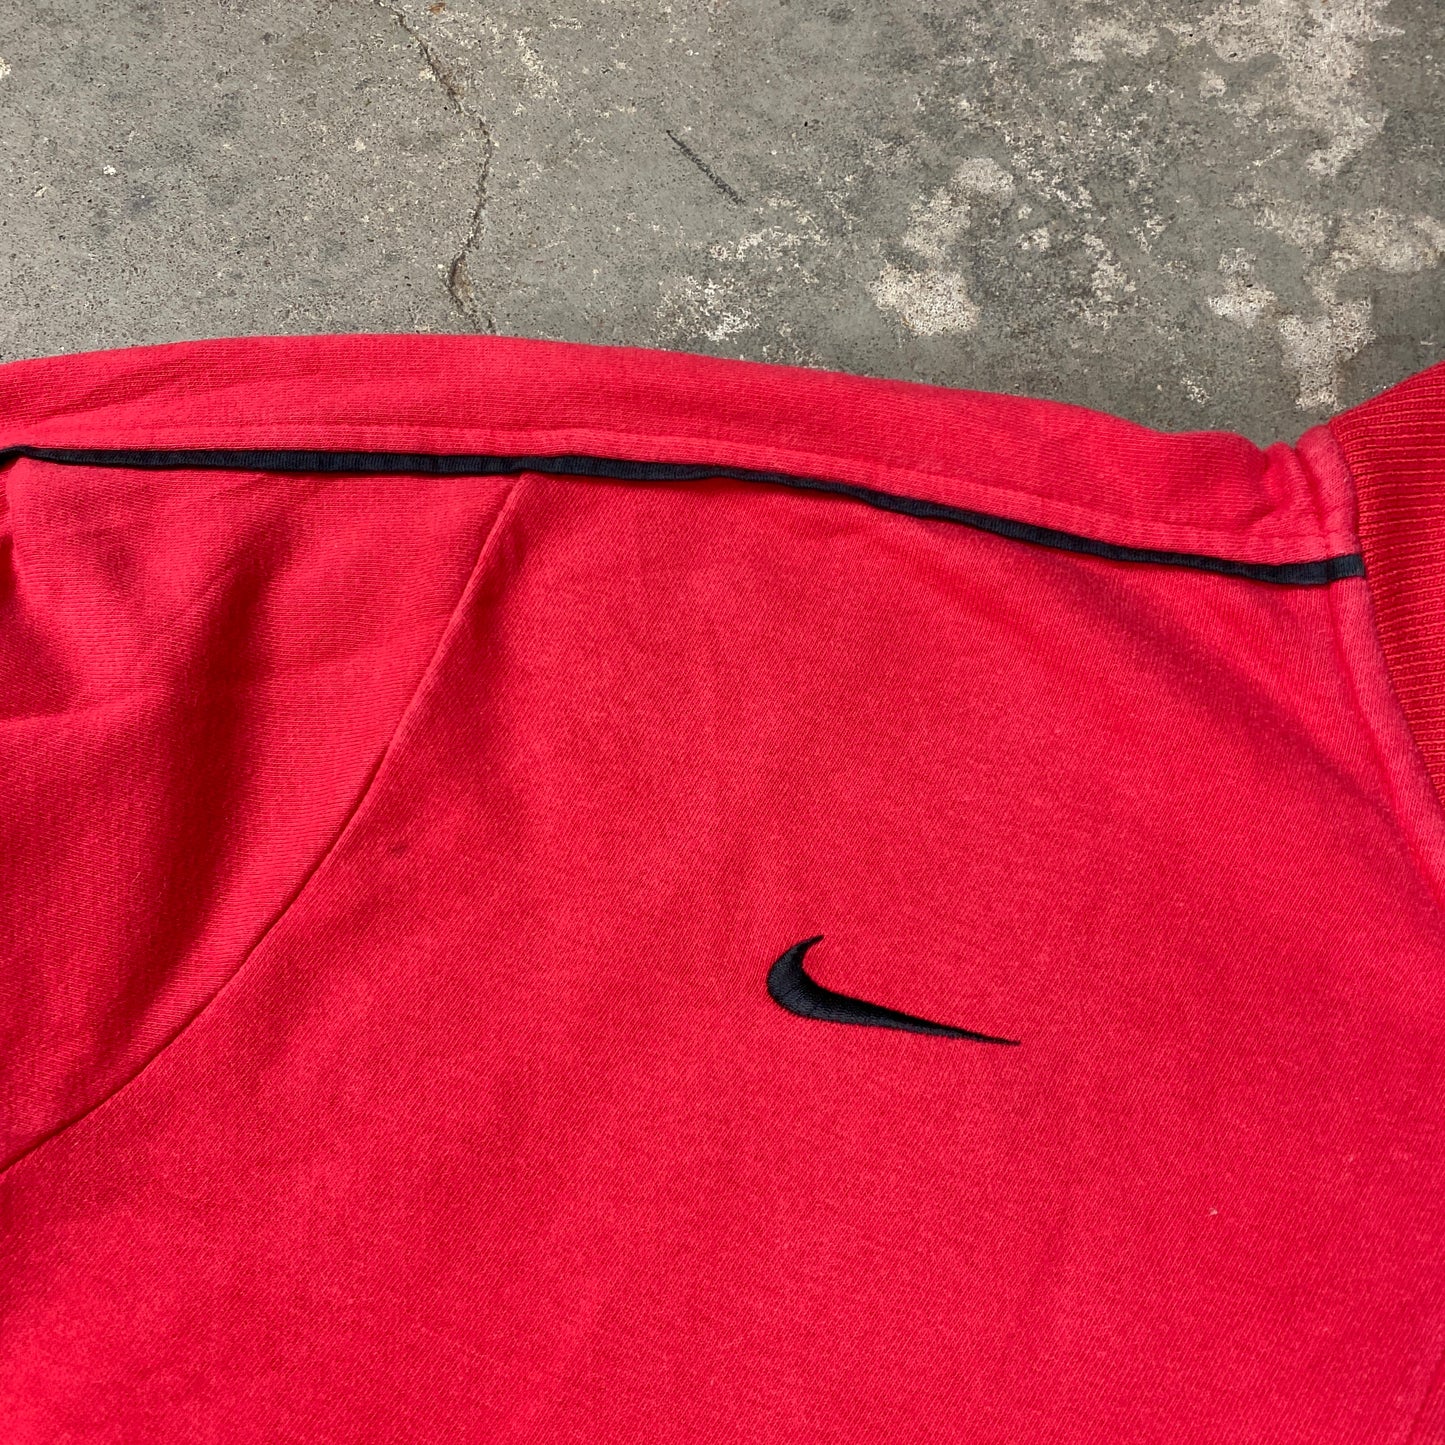 Nike embroidered black swoosh 1/4 zip sweater (XL)